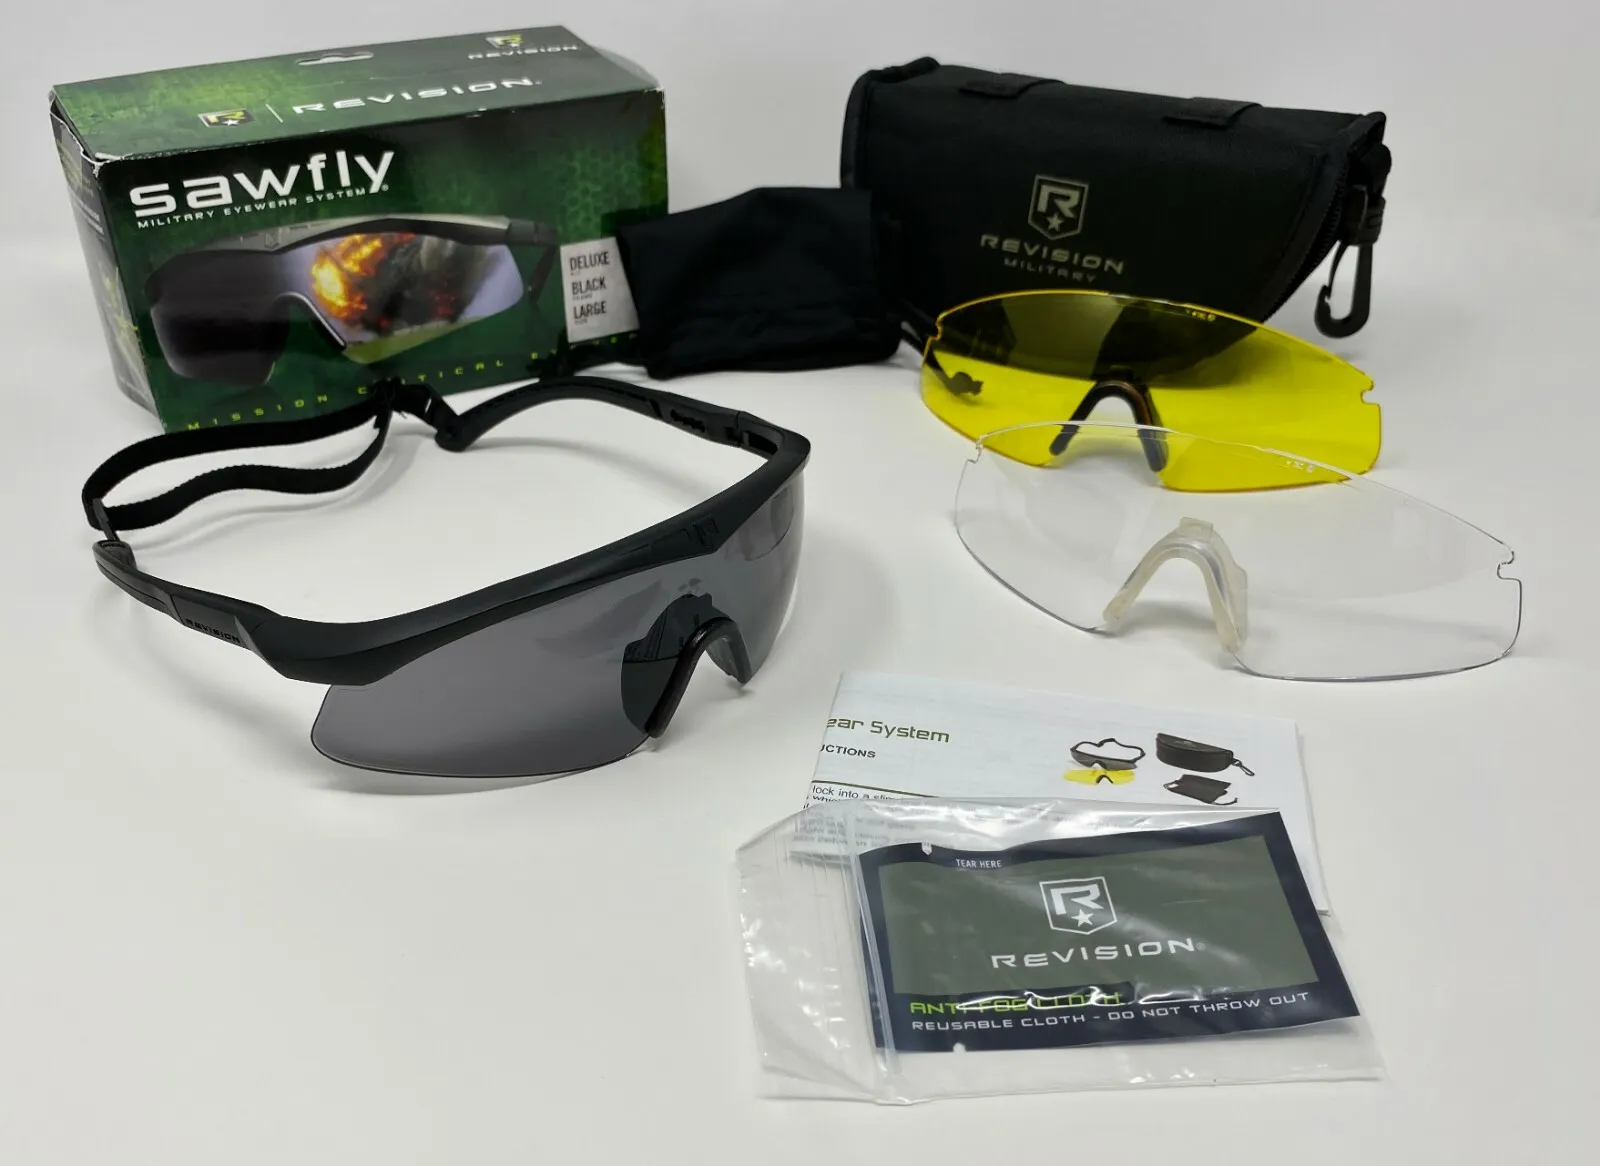 Sawfly Revision Military Eyewear Black